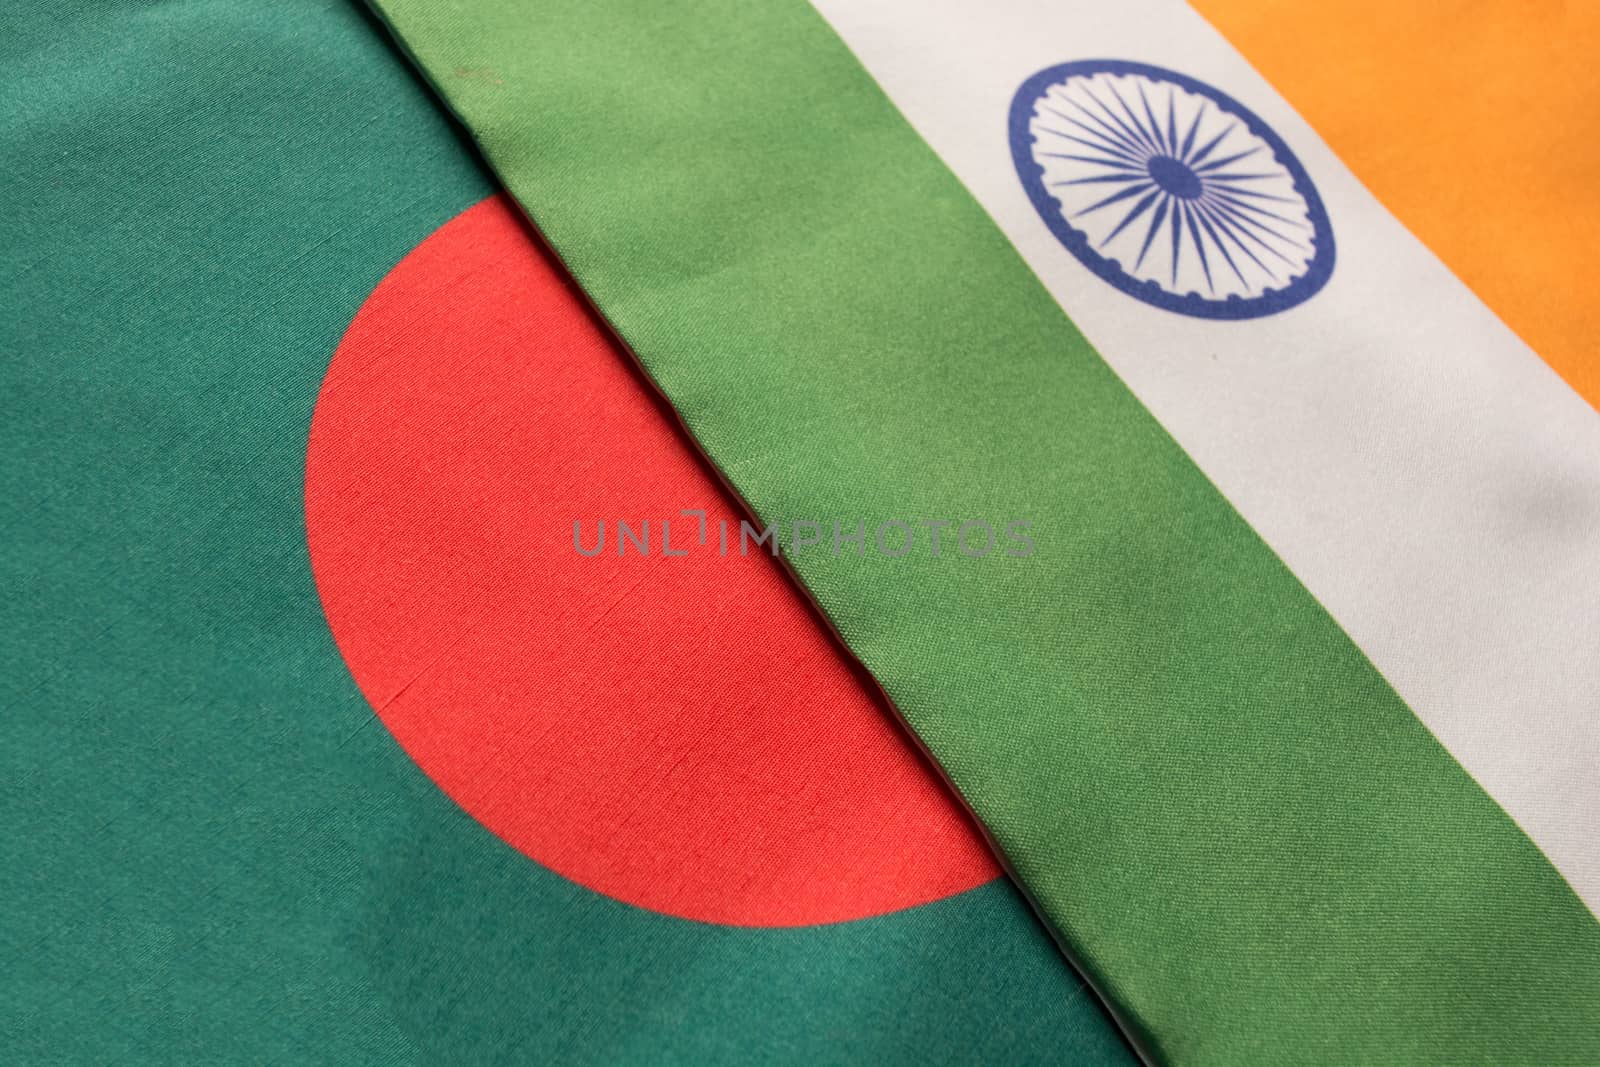 Bangladesh and Indian flags placed on table by lakshmiprasad.maski@gmai.com